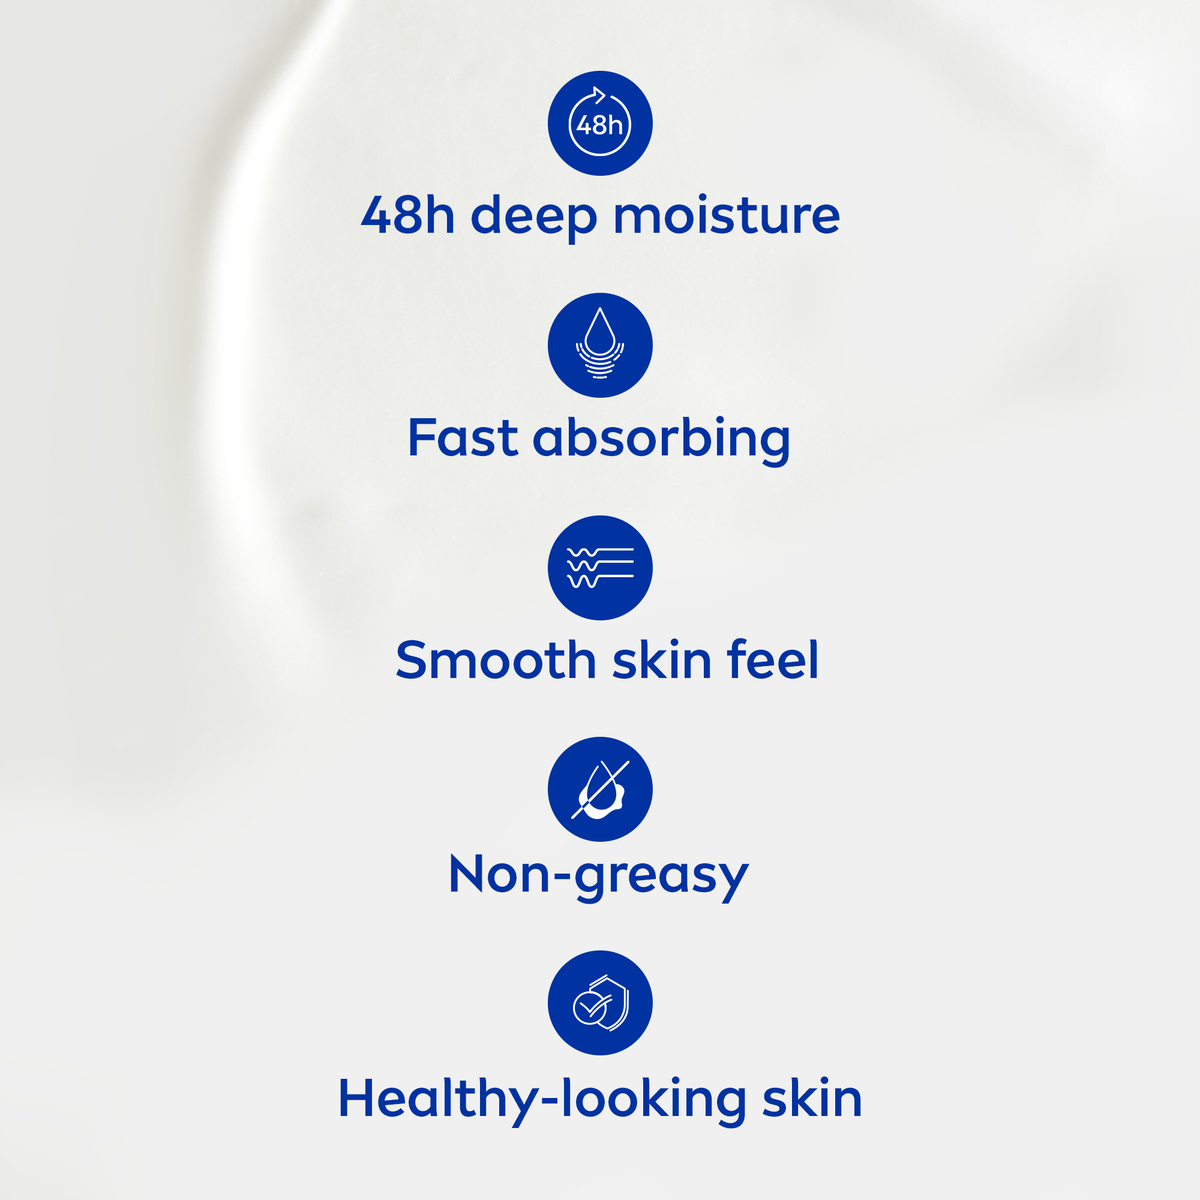 Nivea Body Lotion Express Hydration Normal & Dry Skin 625 ml